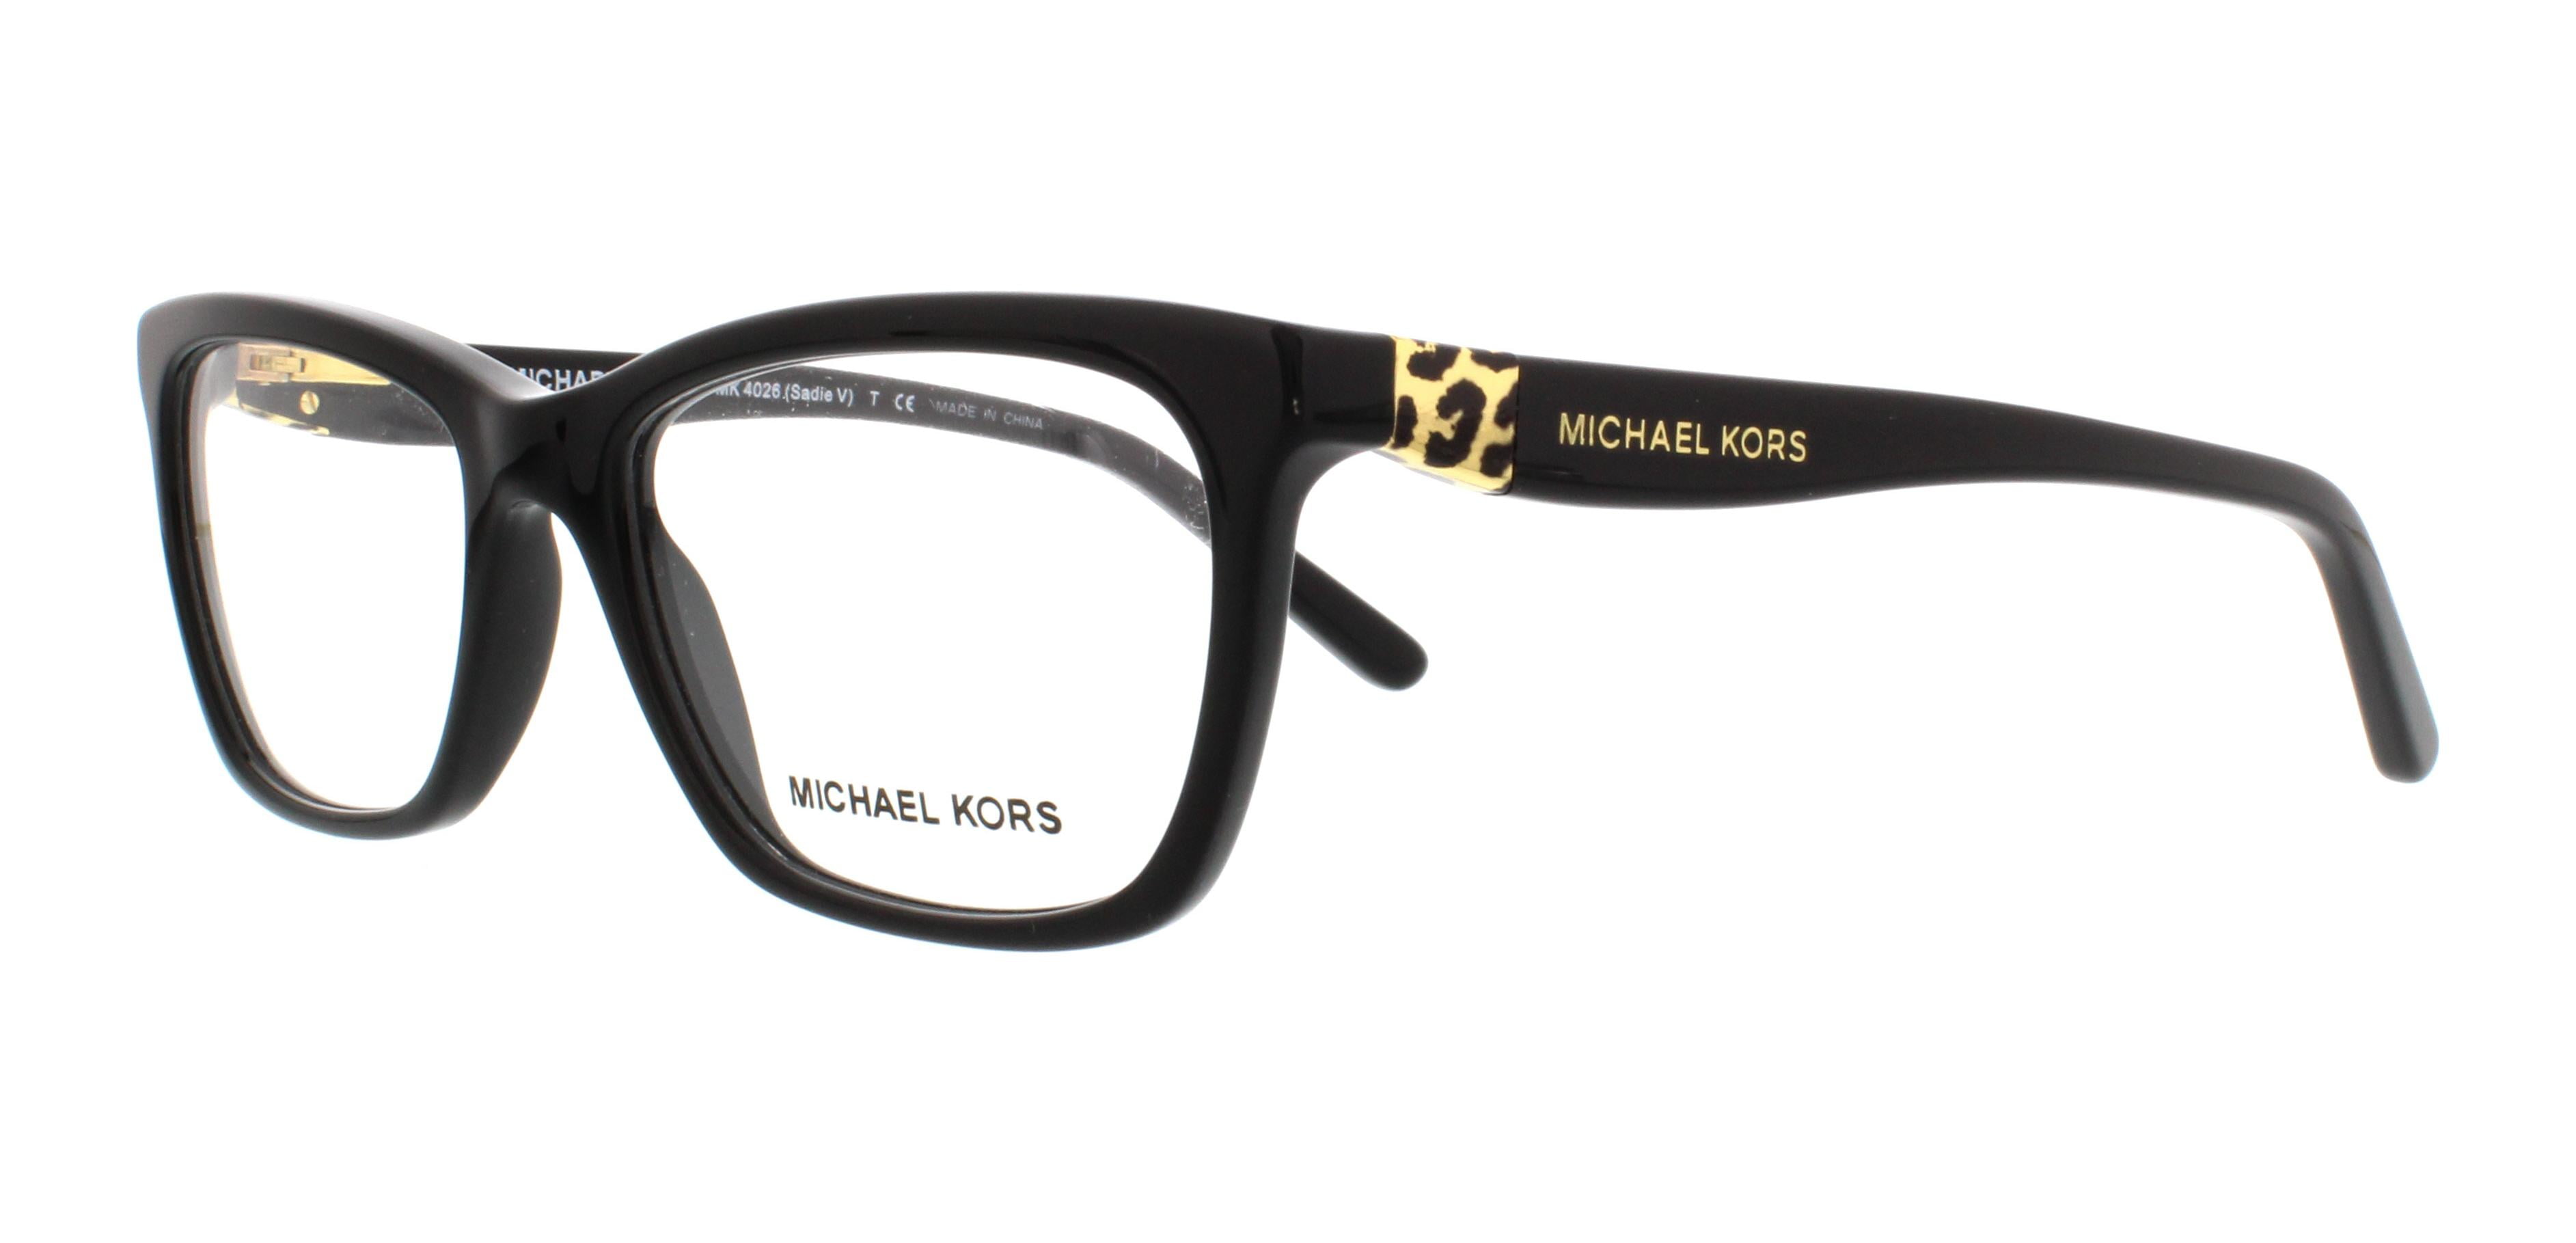 MICHAEL KORS Eyeglasses MK 4026 3005 